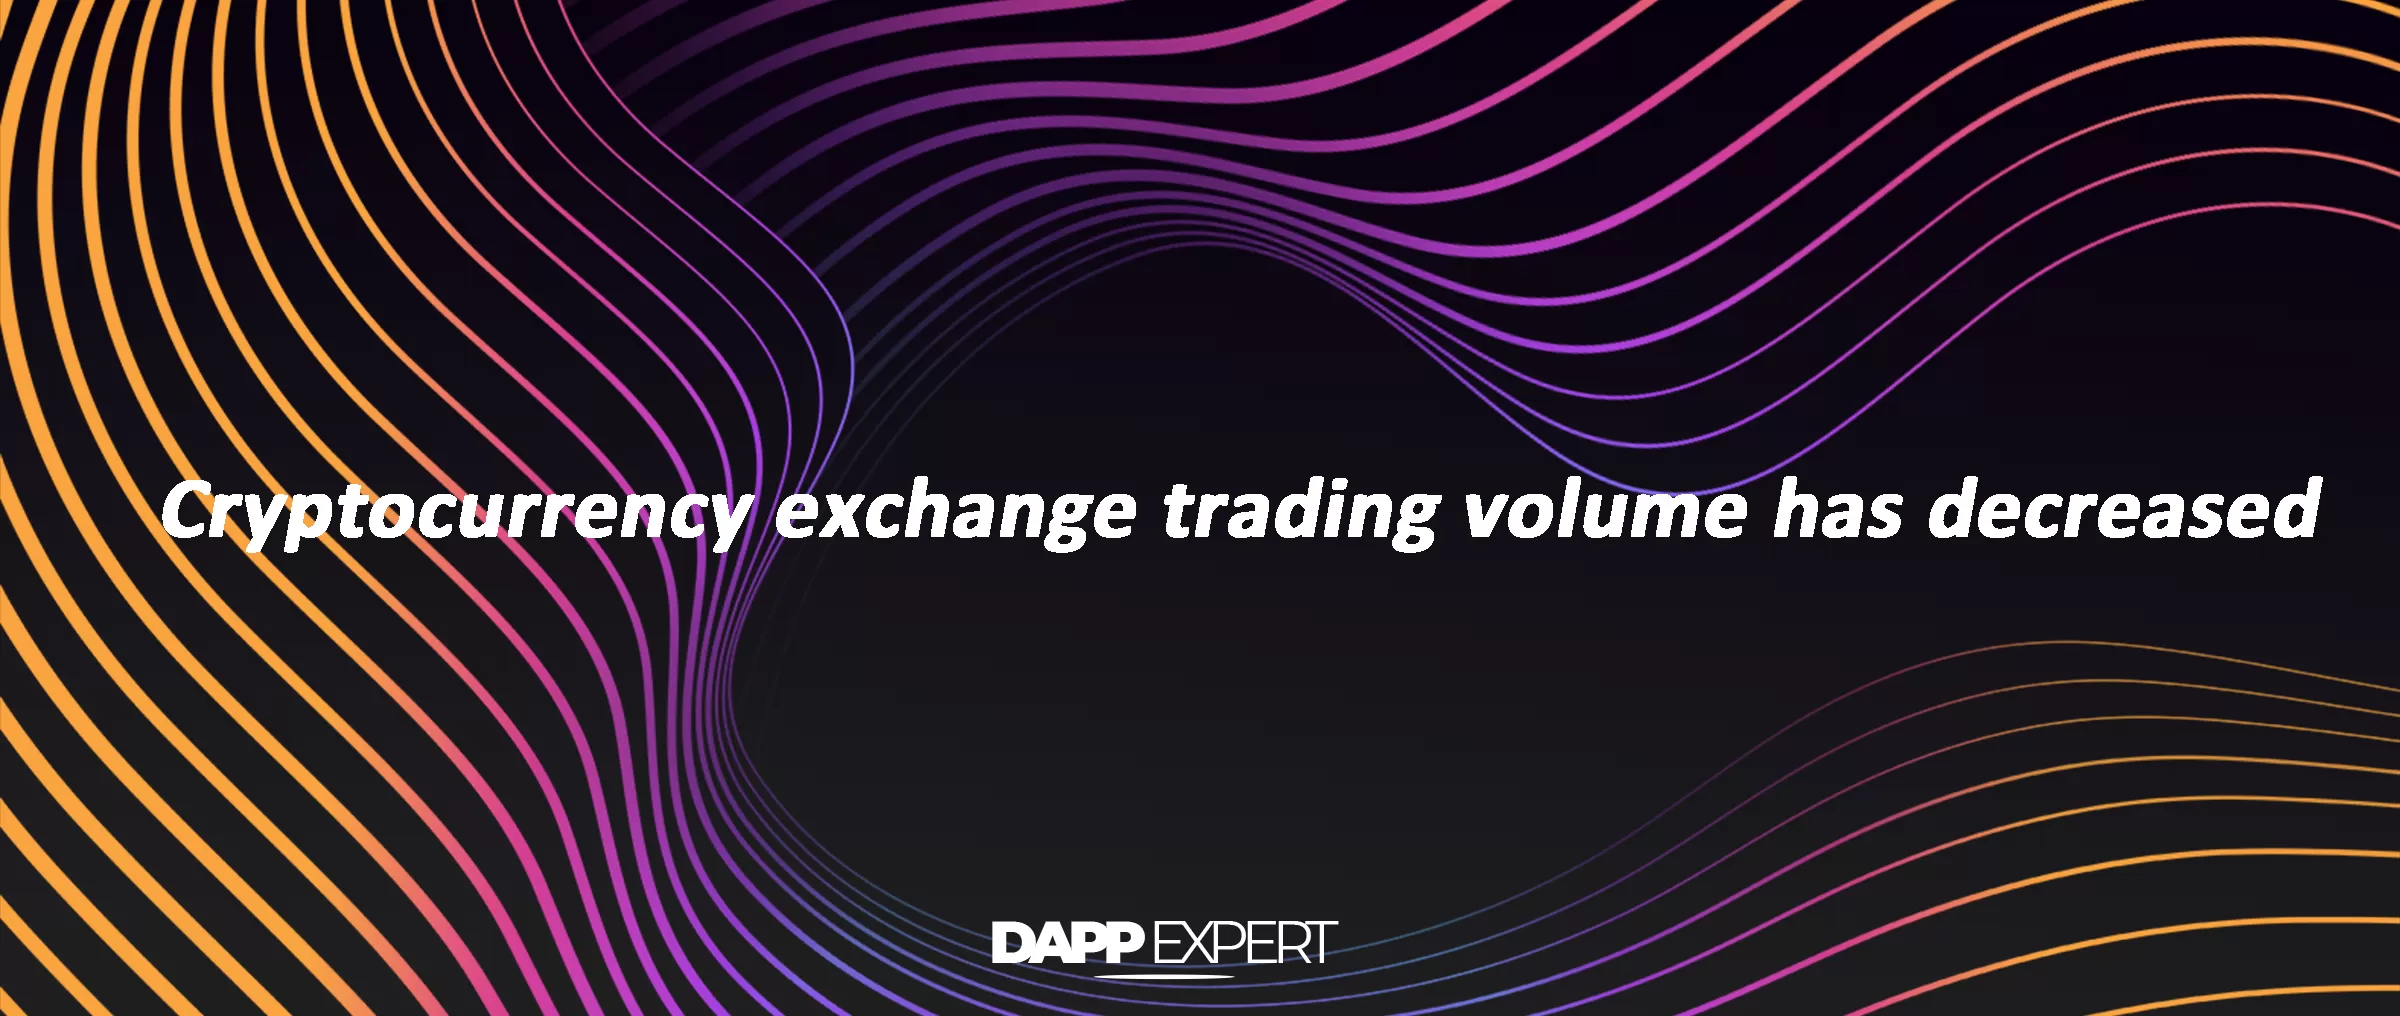 Cryptocurrency exchange trading volume has decreased